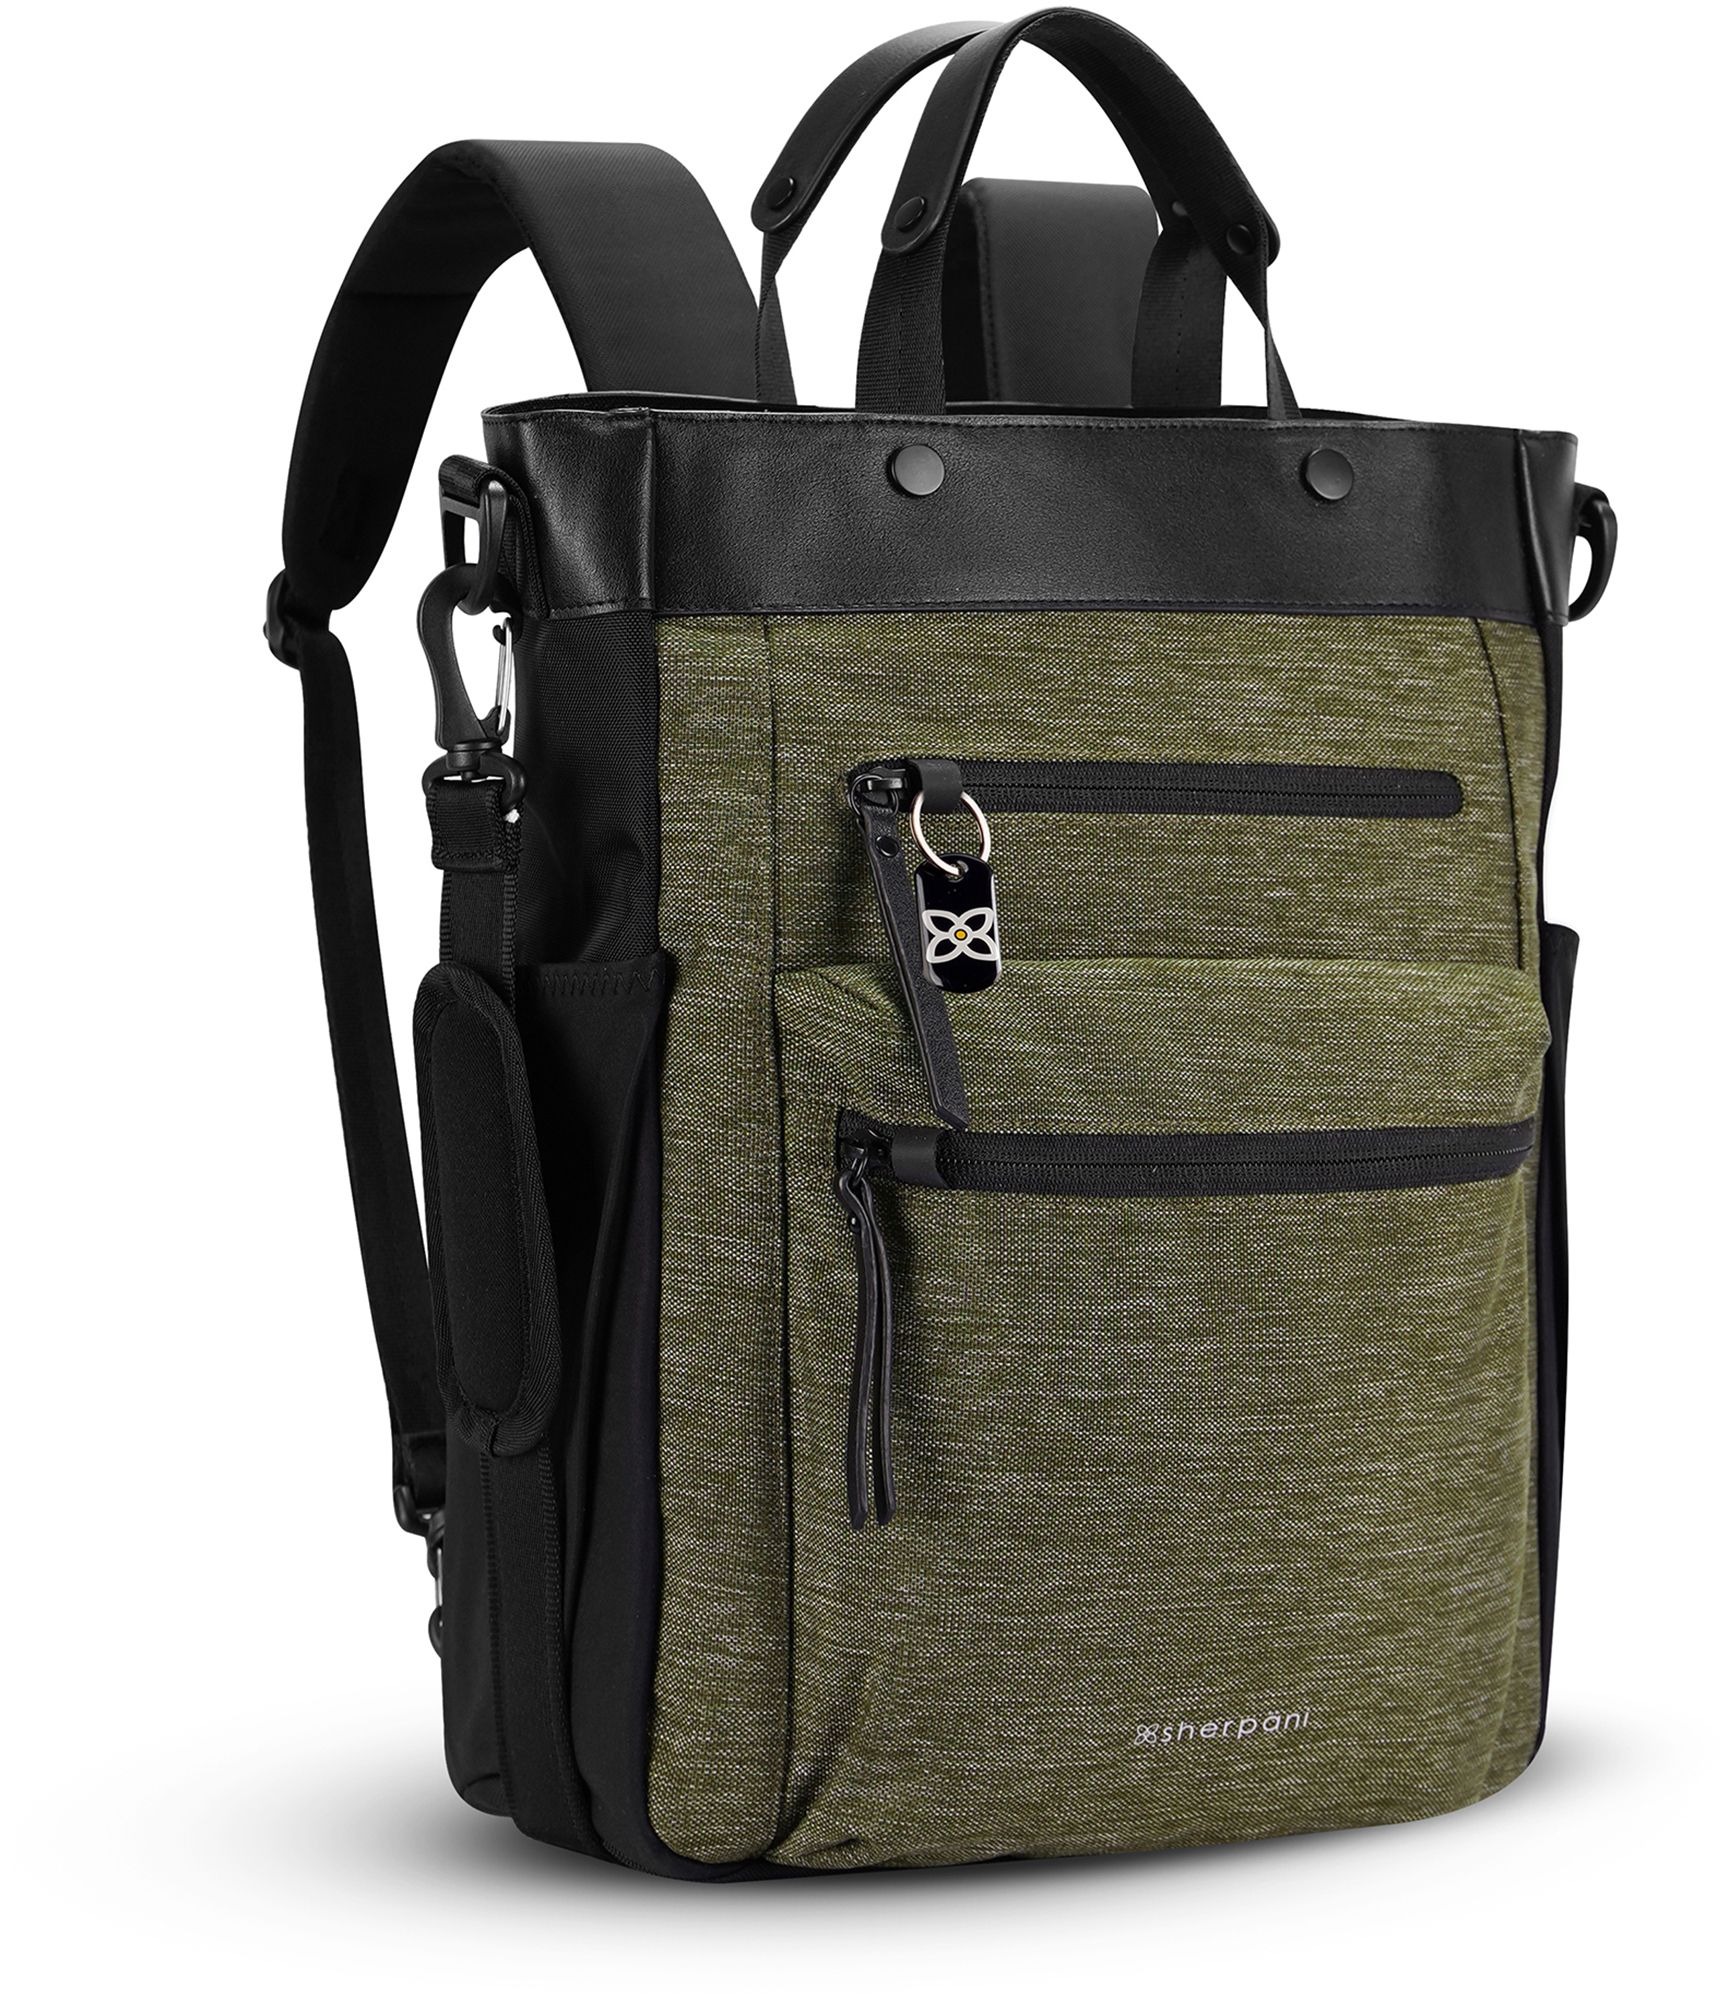 Sherpani Soleil Convertible Backpack